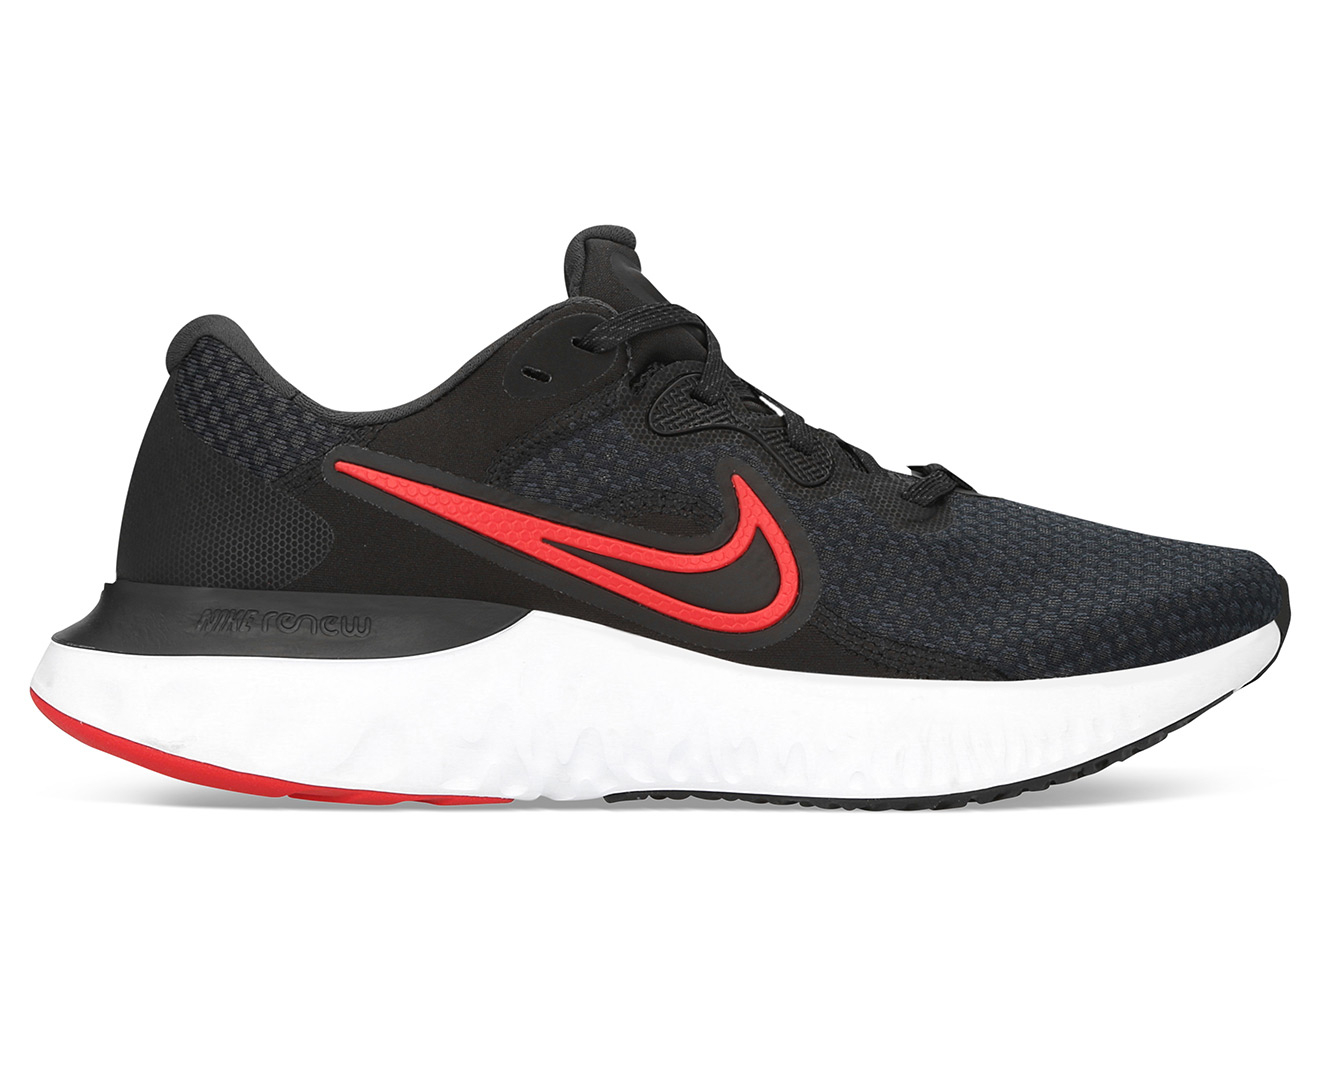 Nike Men's Renew Run 2 Running Shoes - Black/University Red | Www.catch ...